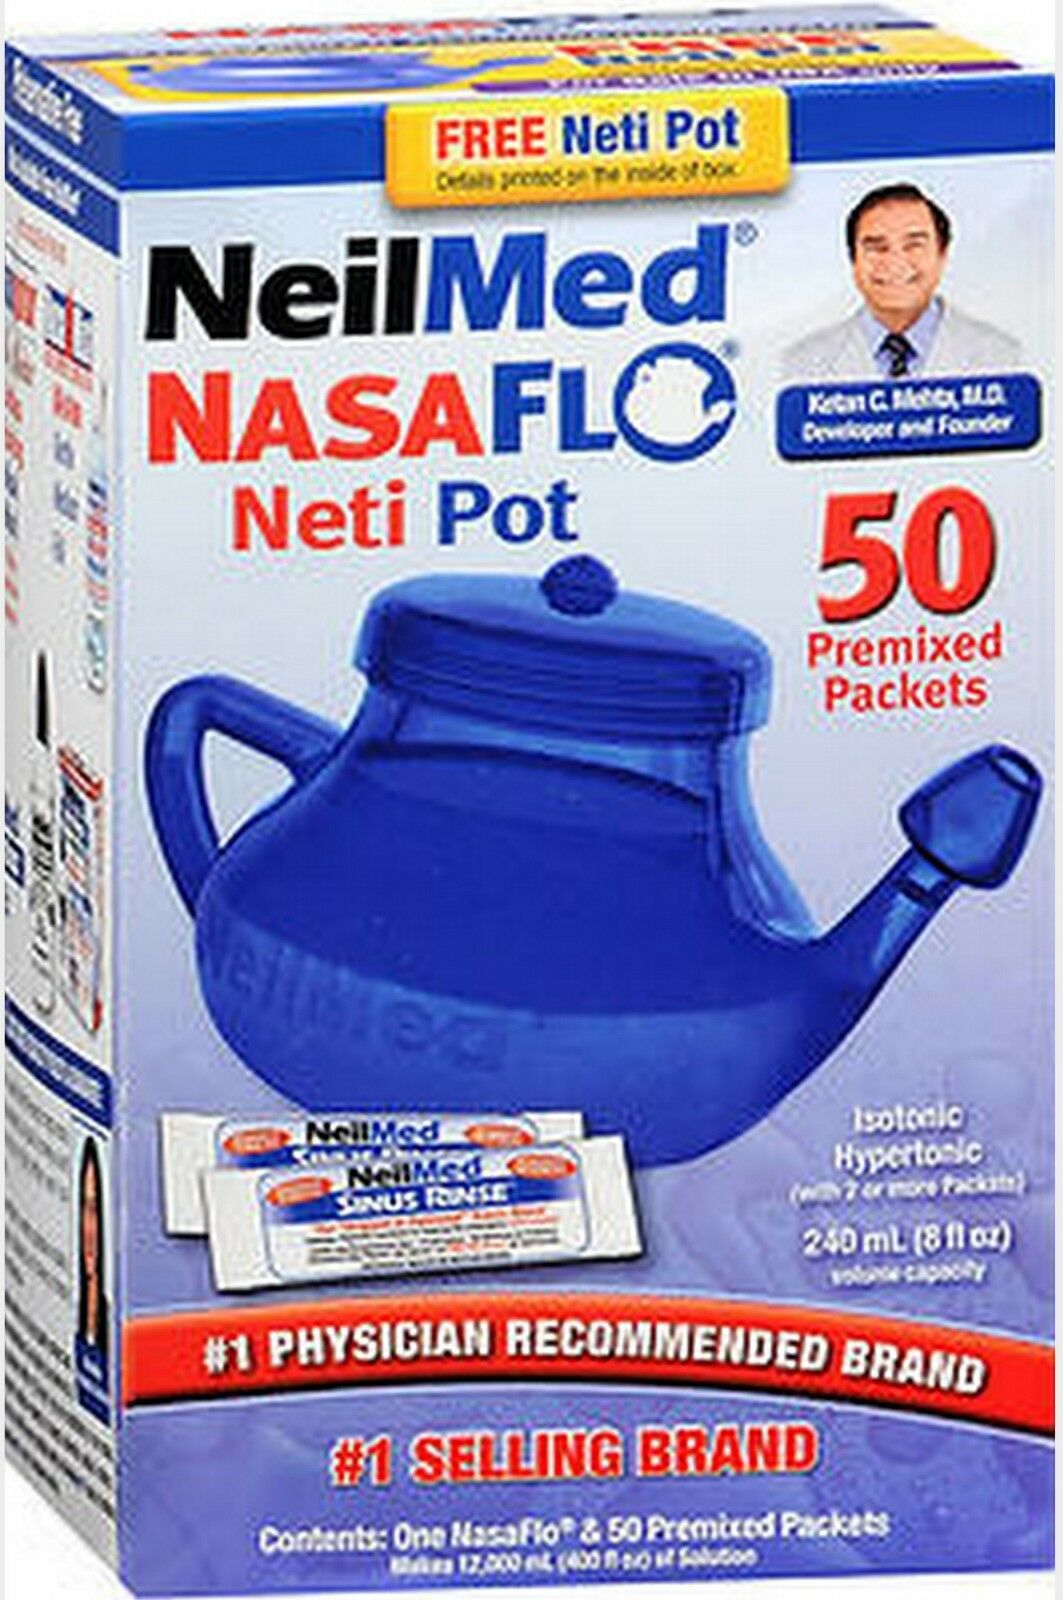 Neilmed Nasaflo Neti Pot With 50 Premixed Packets (firm Blue Pot)